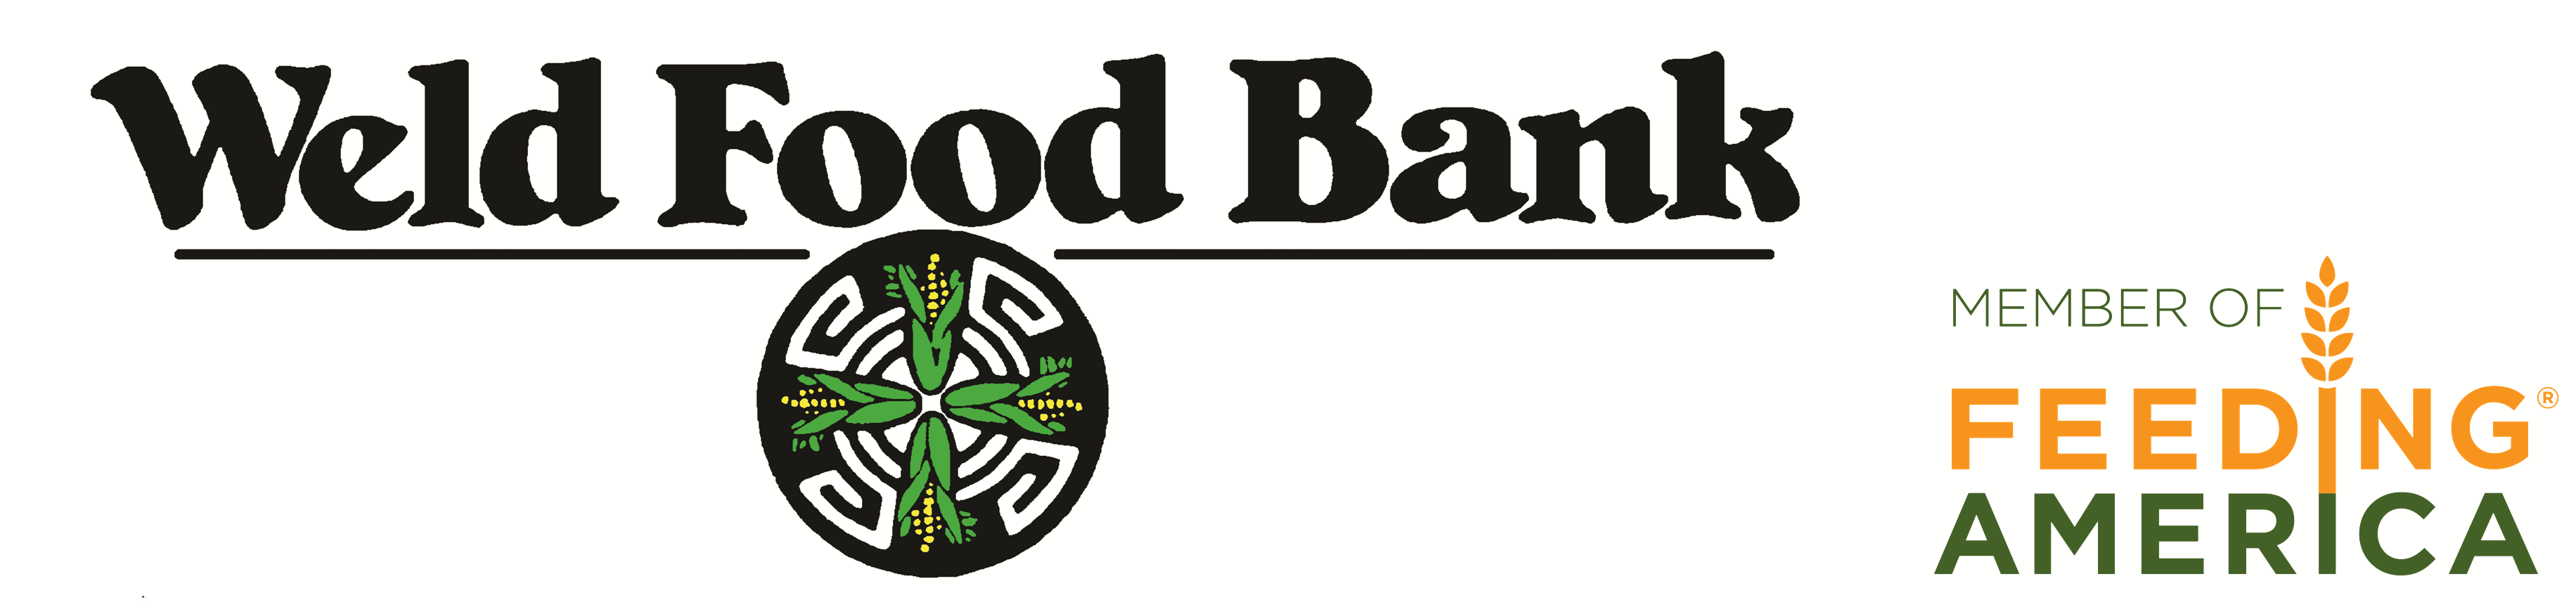 Weld Food Bank